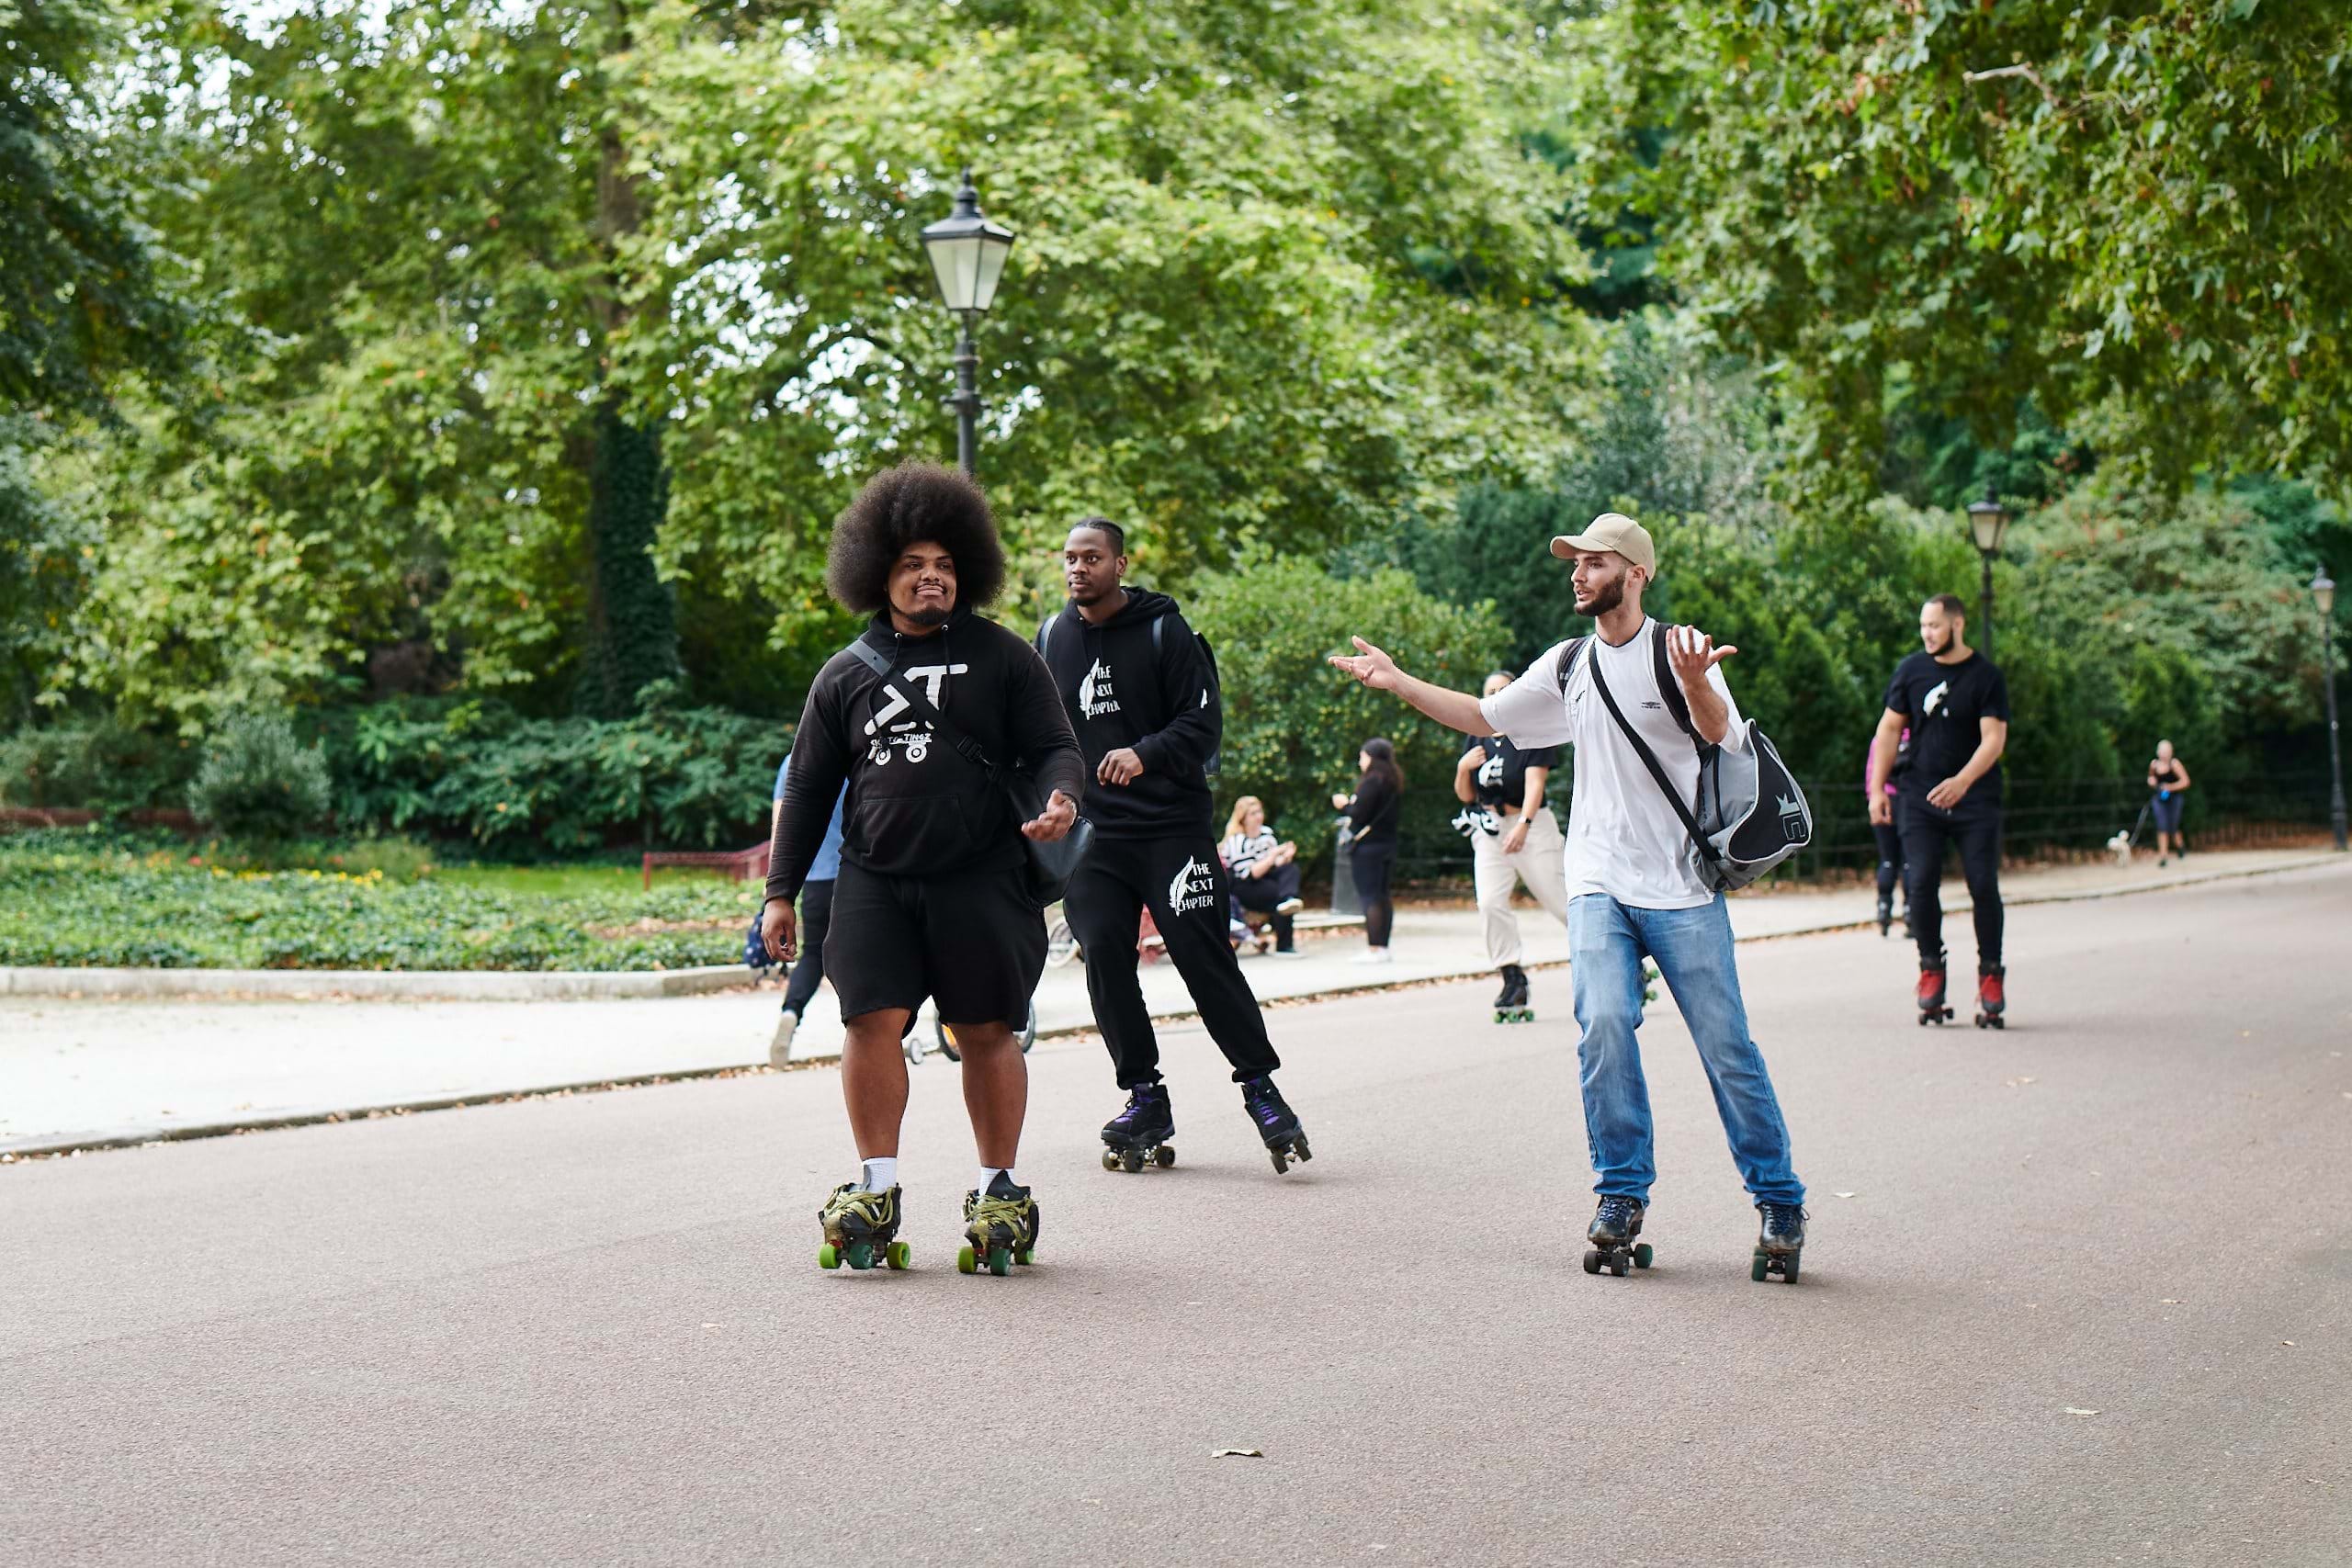 Men roller-blading in Battersea Park